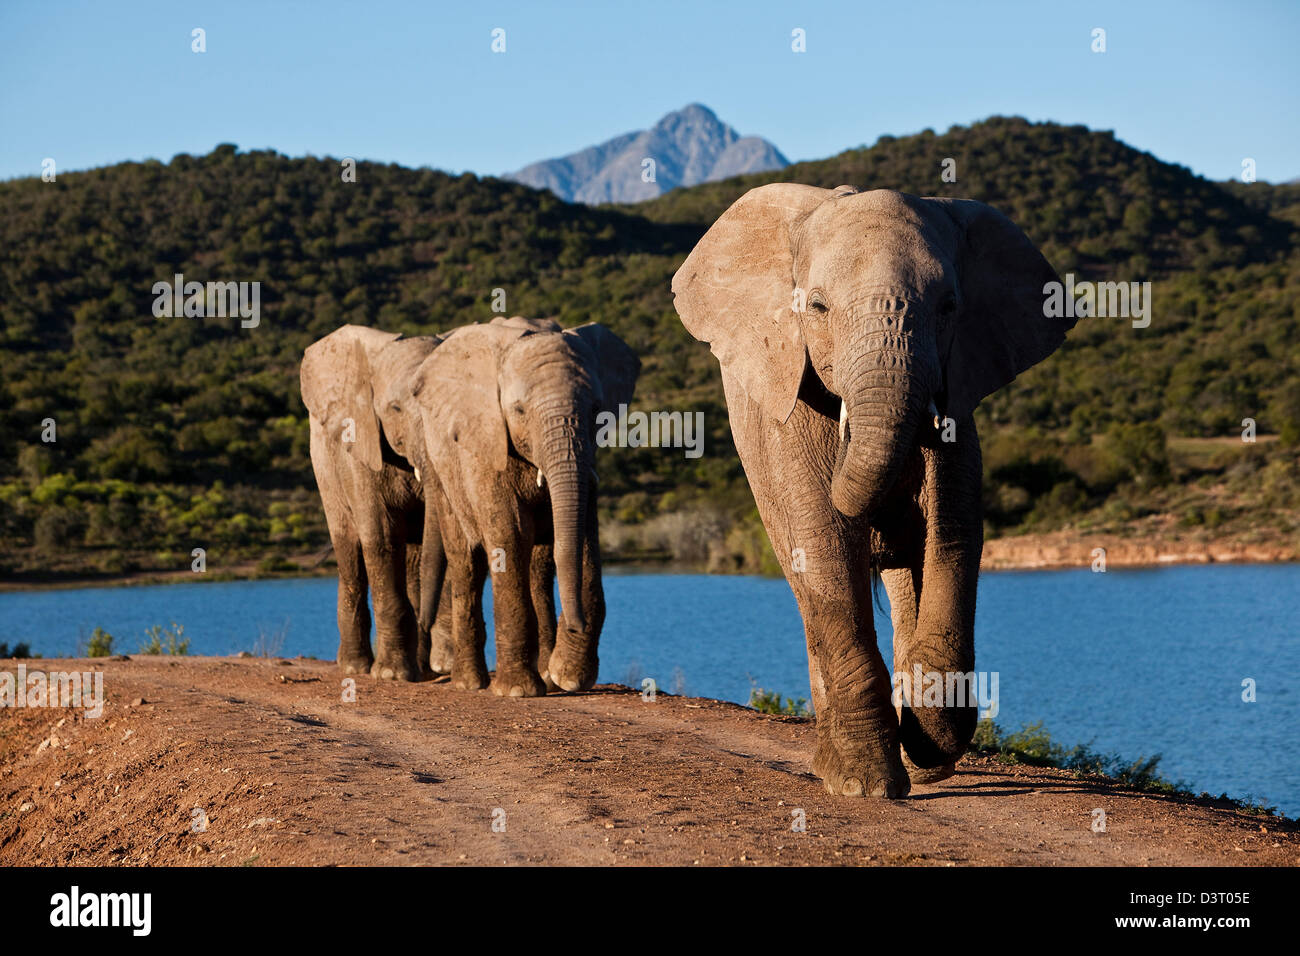 Elephants walking at lakeside in Buffelsdrift Game Lodge, South Africa Stock Photo